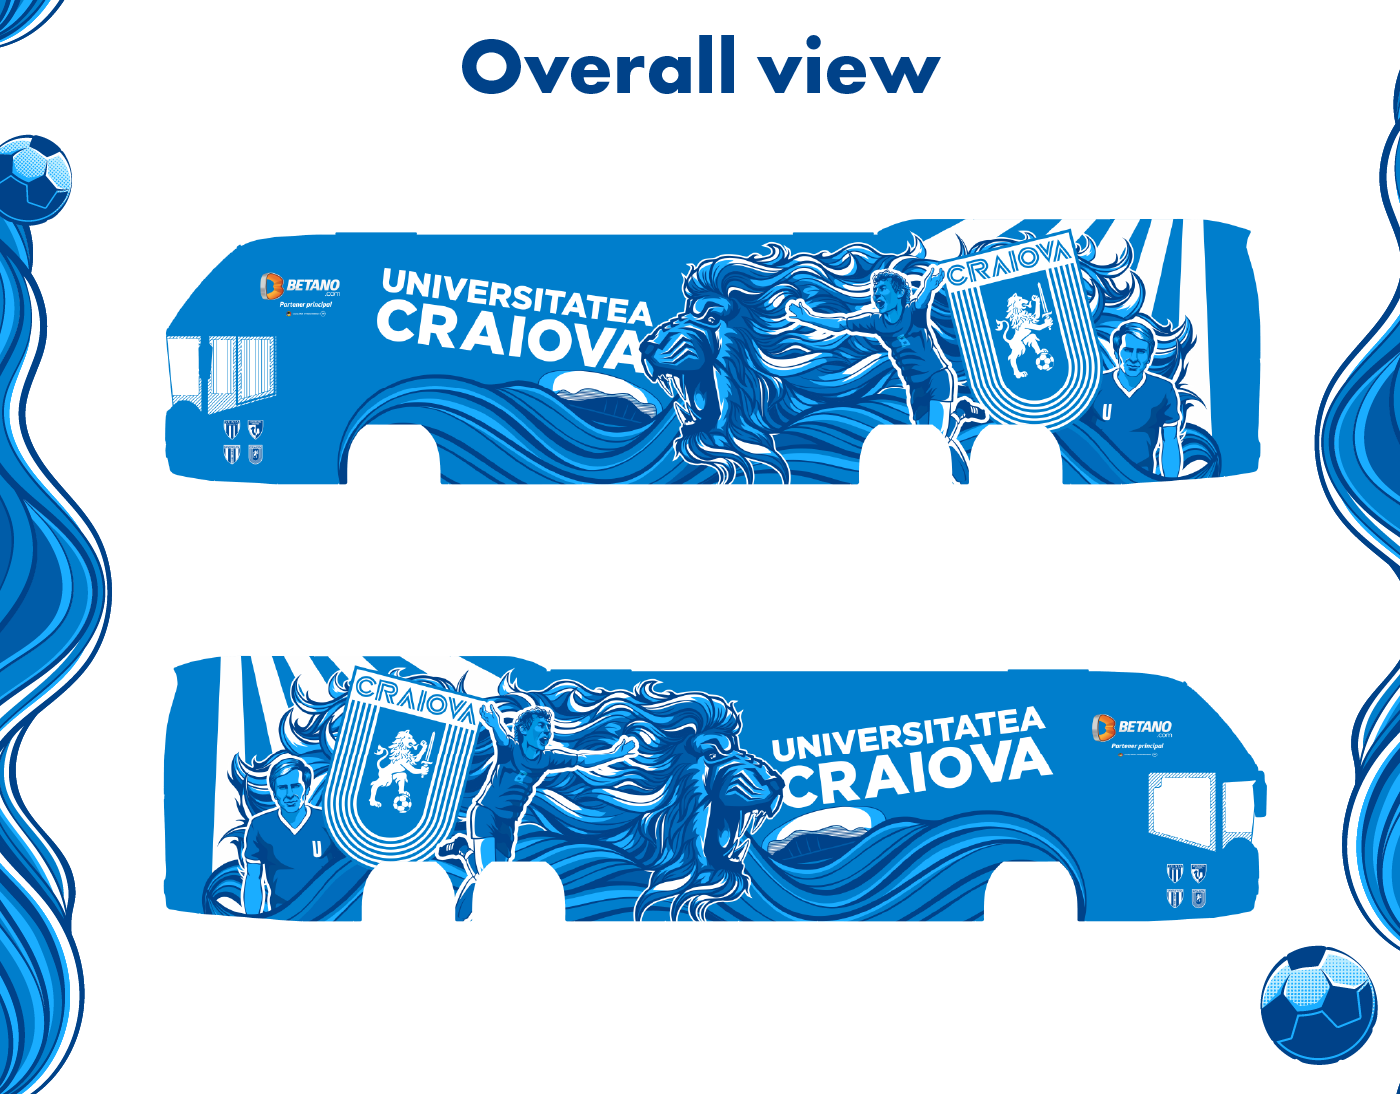 Universitatea Craiova craiova bus Bus Wrap wrap illustration Bus illustration bus design wrap design football Wrap